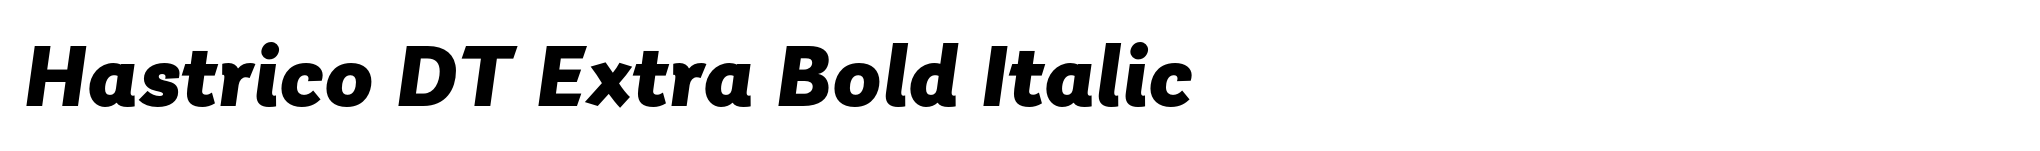 Hastrico DT Extra Bold Italic image